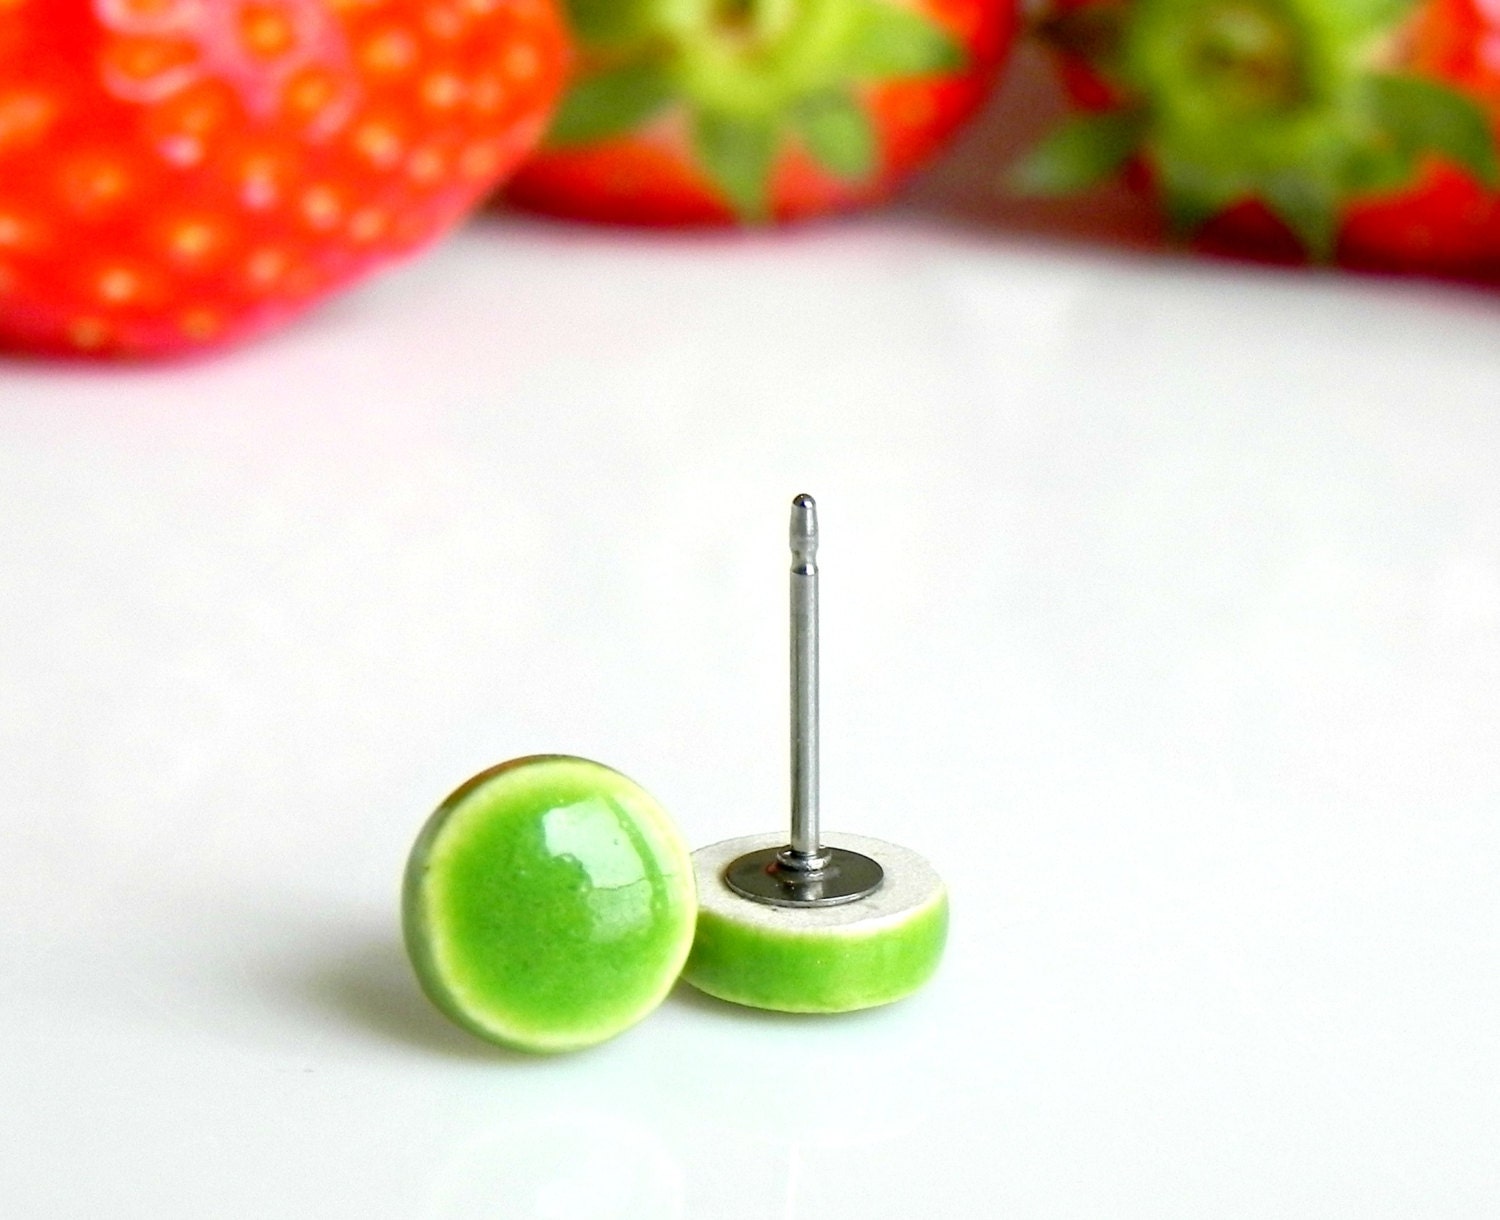 Apple Green Ceramic Stud Earrings Neon Green Color Post Hypoallergenic Geometric Minimalist Modern Earrings - LemoneRouge